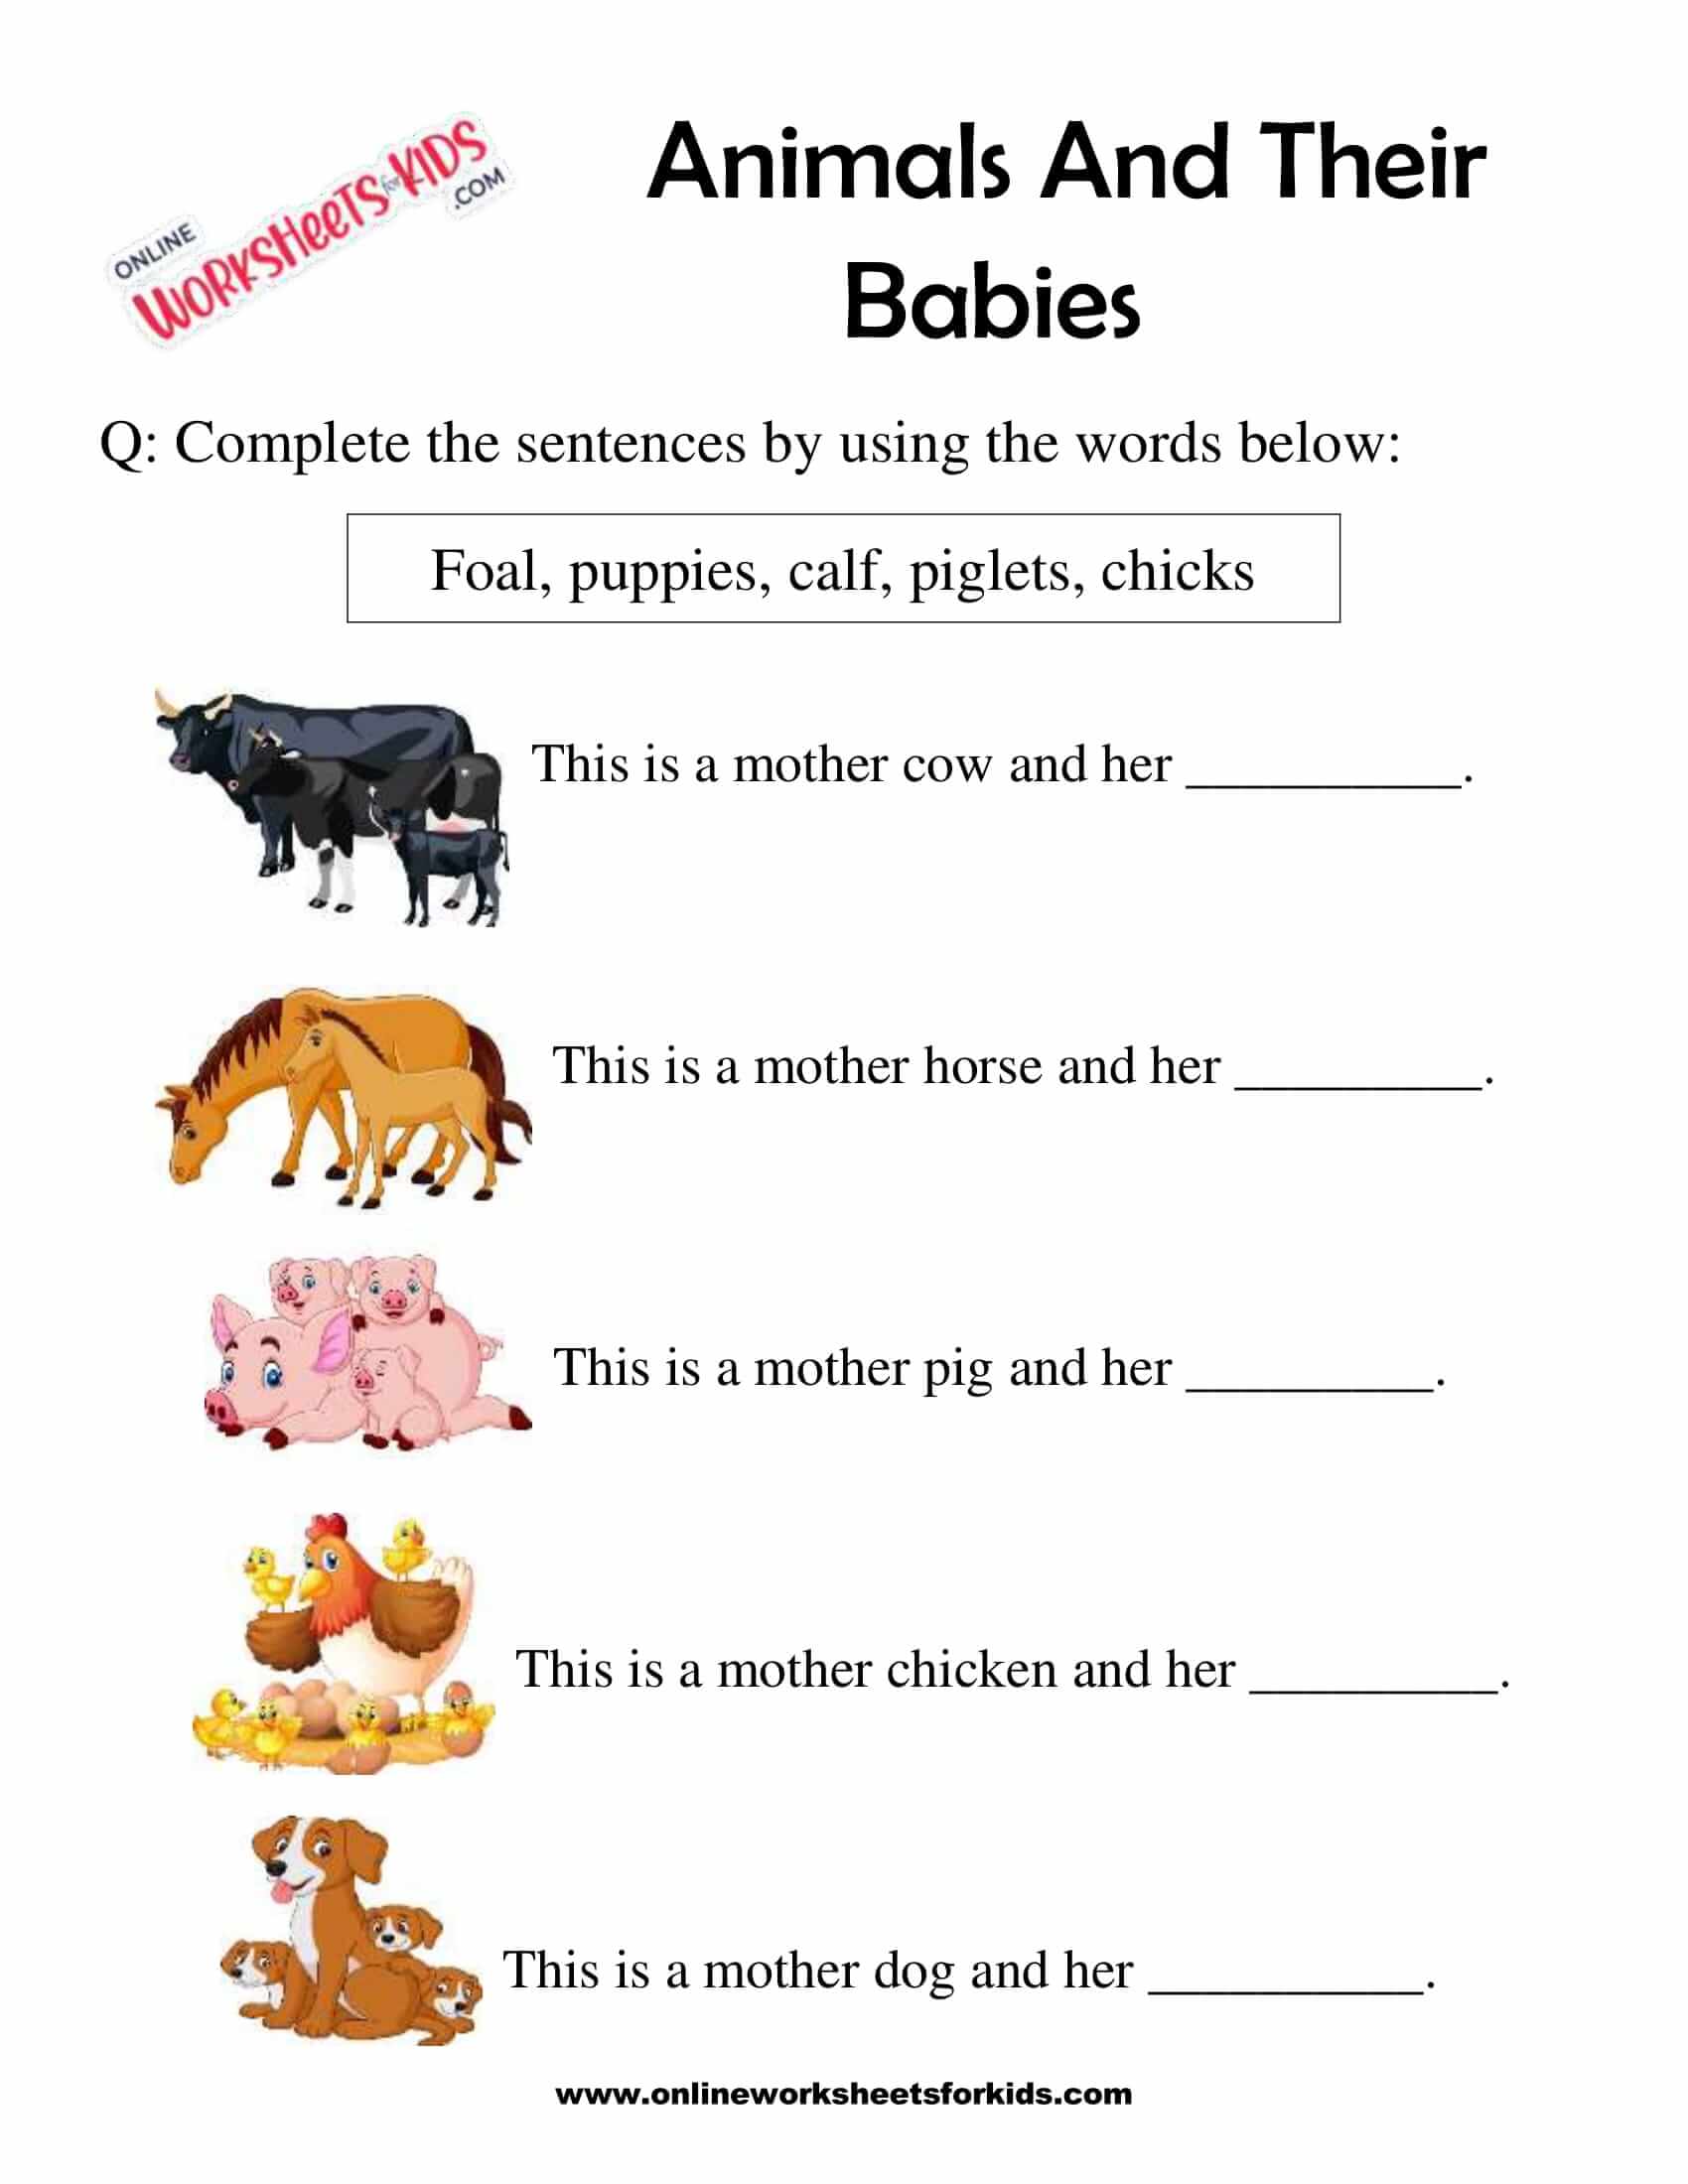 Top 159 + Printable animal and babies worksheet - Lifewithvernonhoward.com